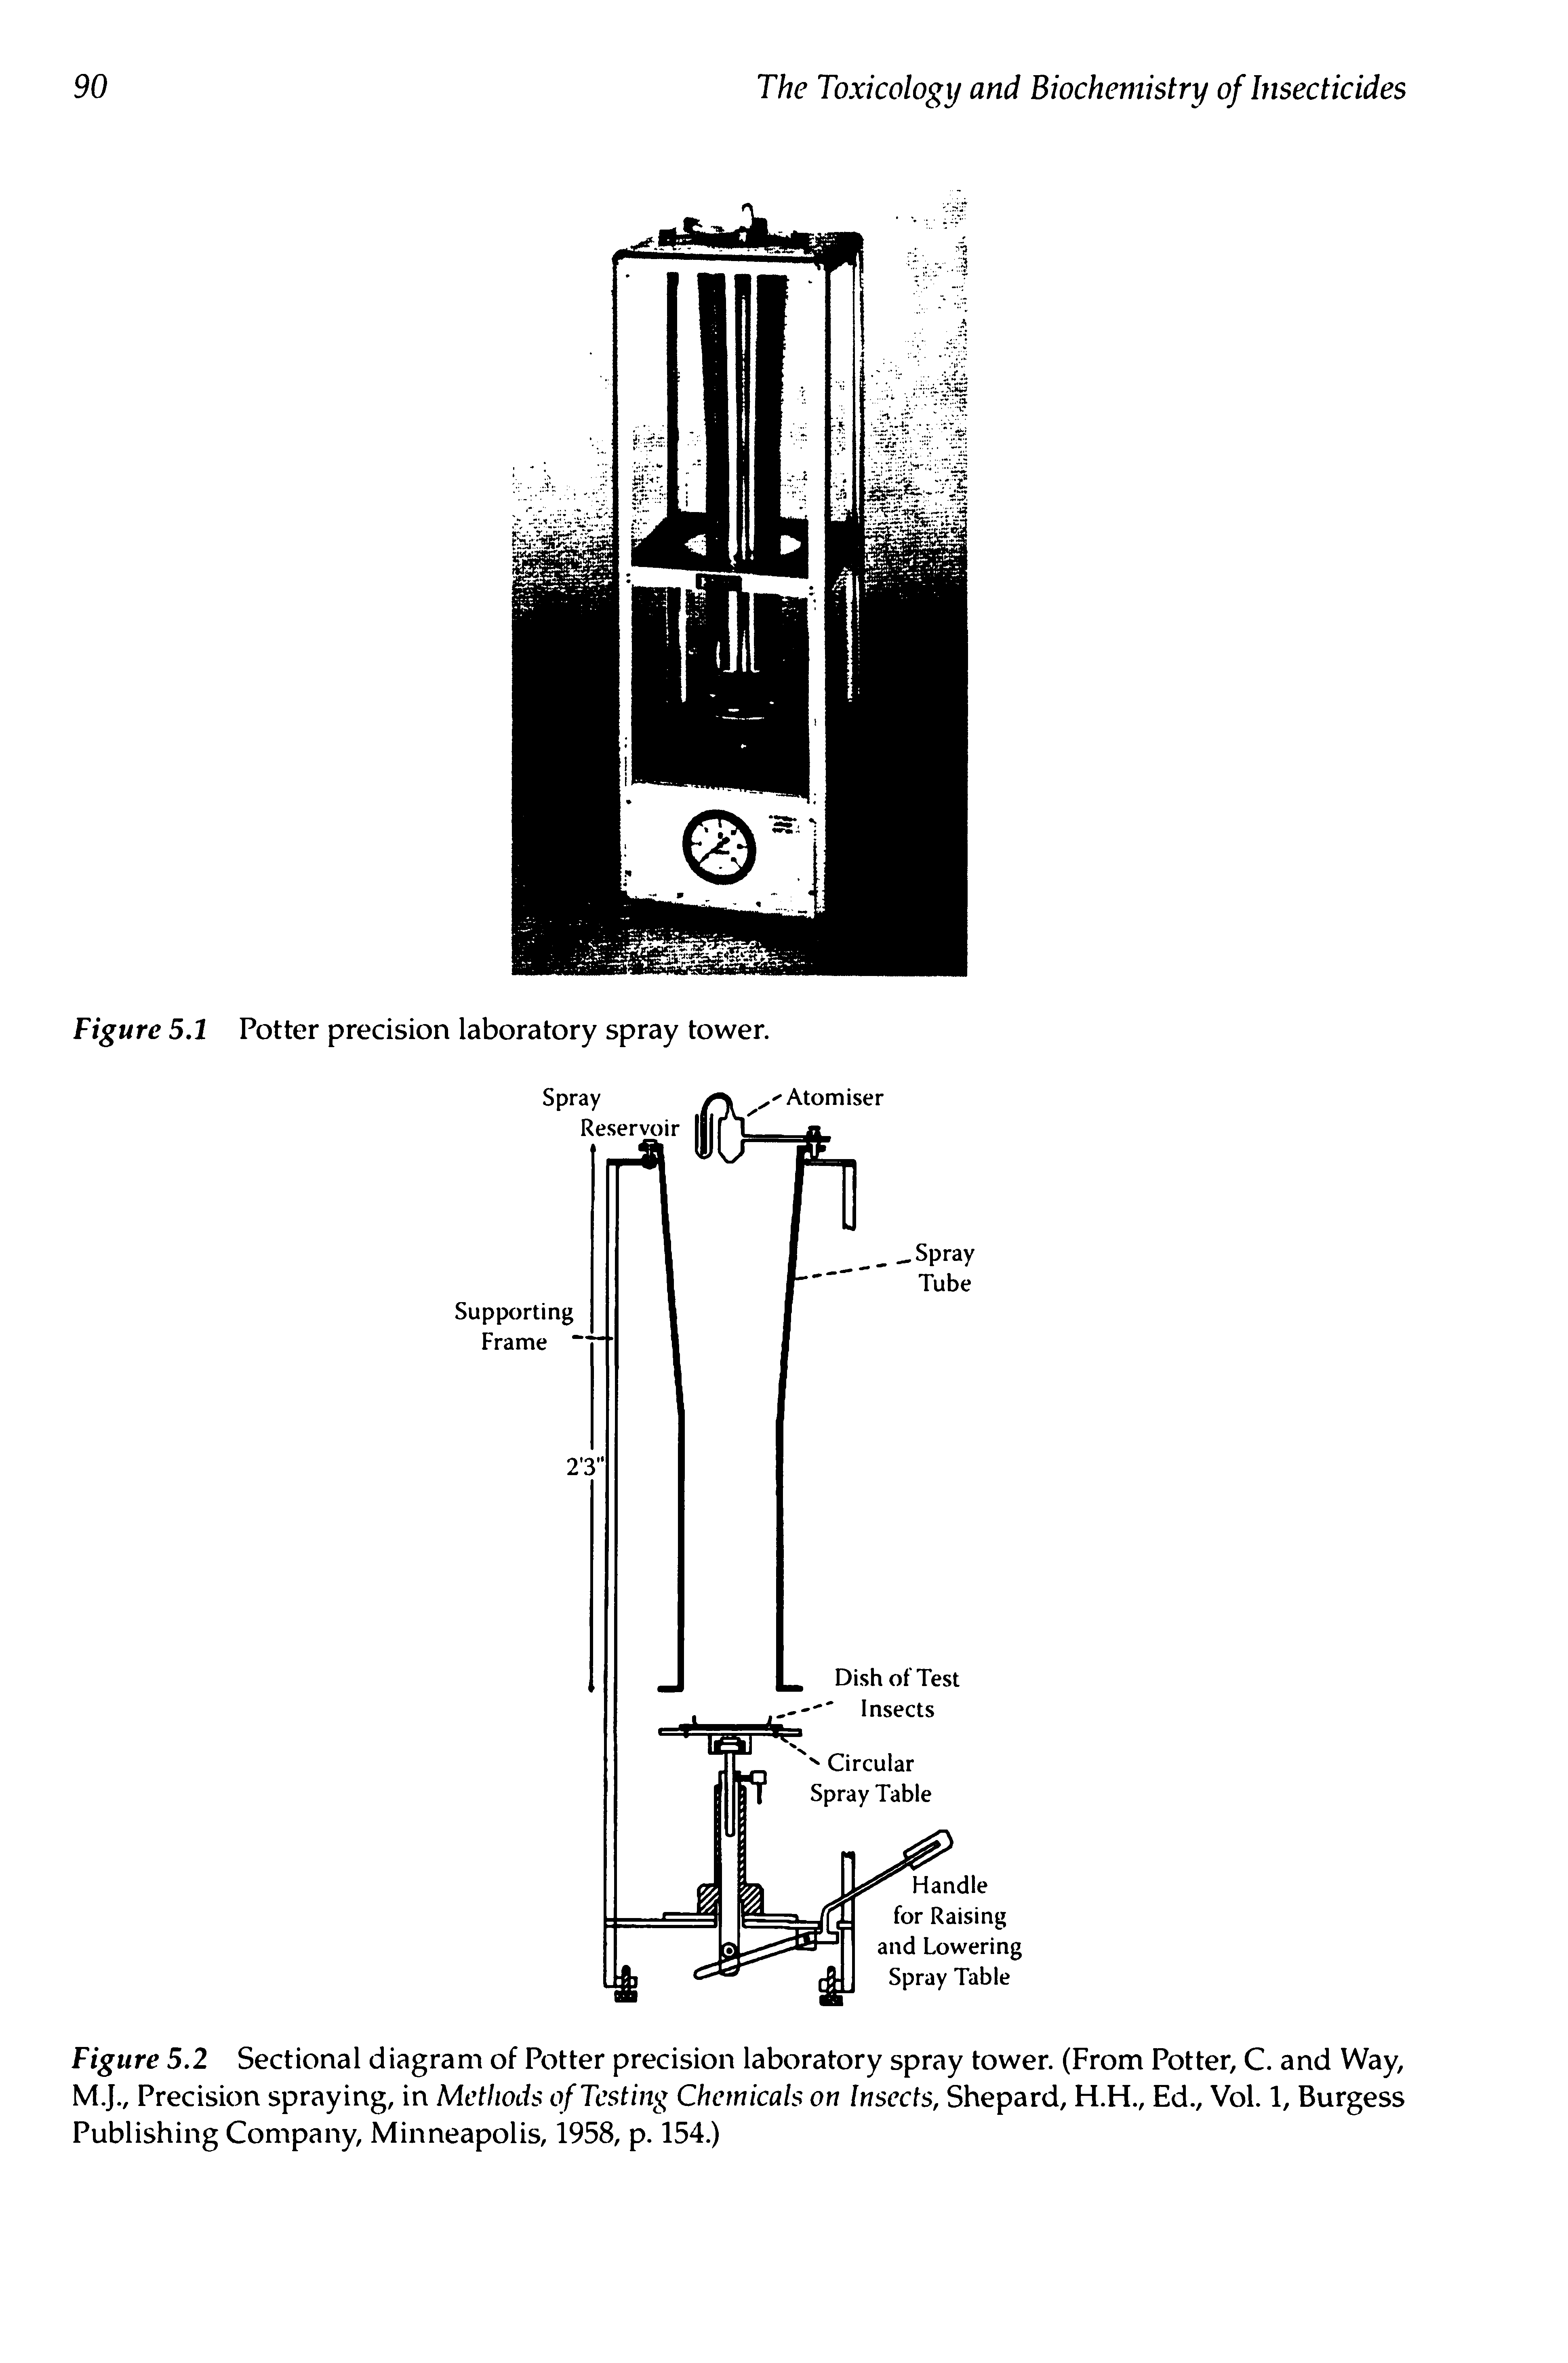 Figure 5.1 Potter precision laboratory spray tower.